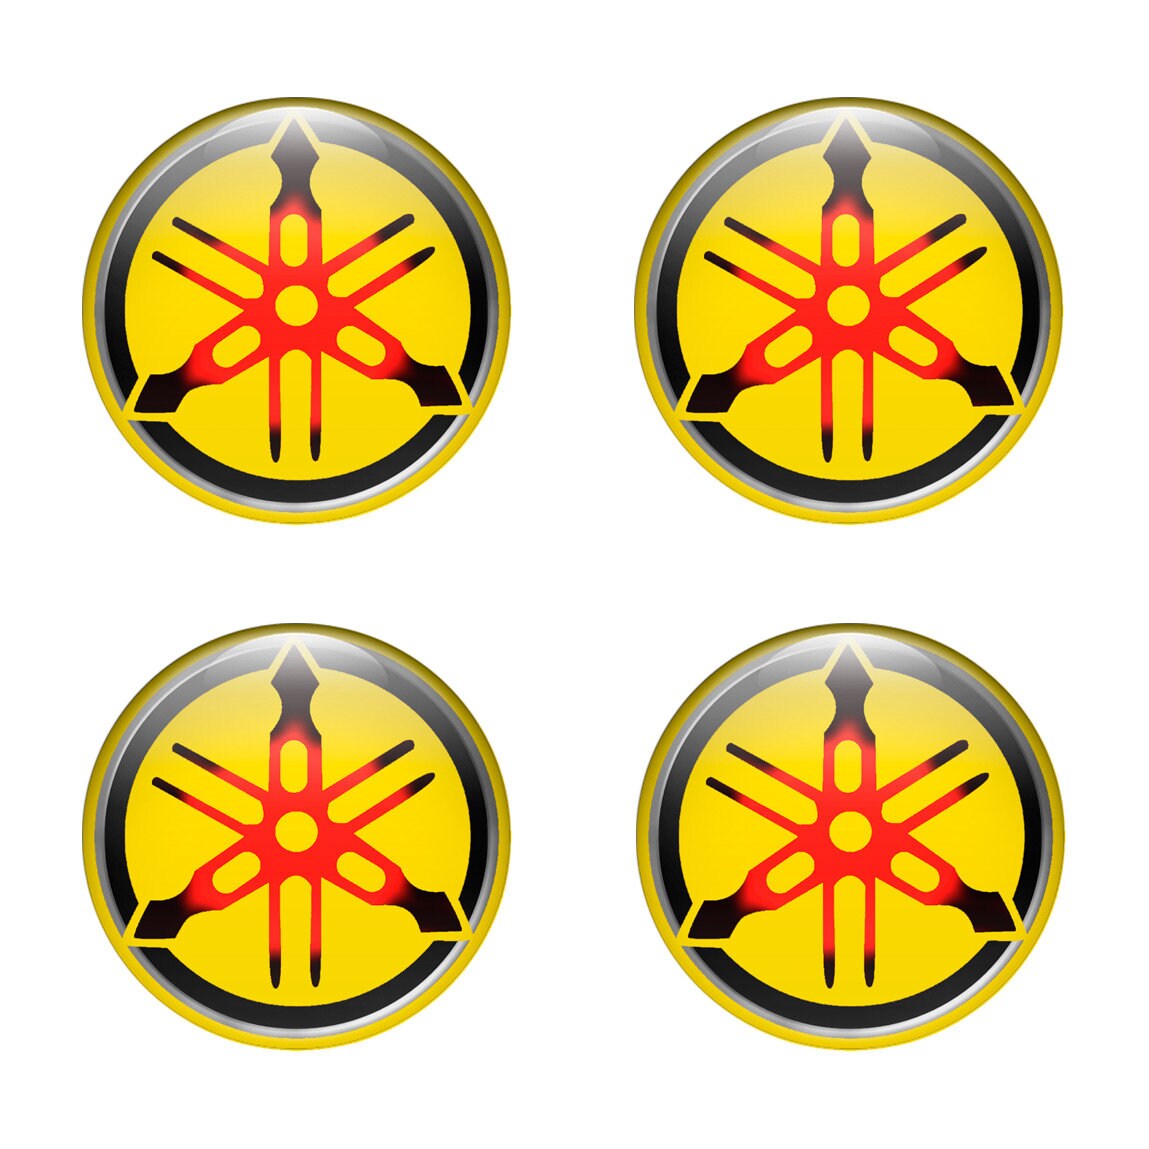 55mm SILIKON embleme FORD rad mitte aufkleber Radkappen logo